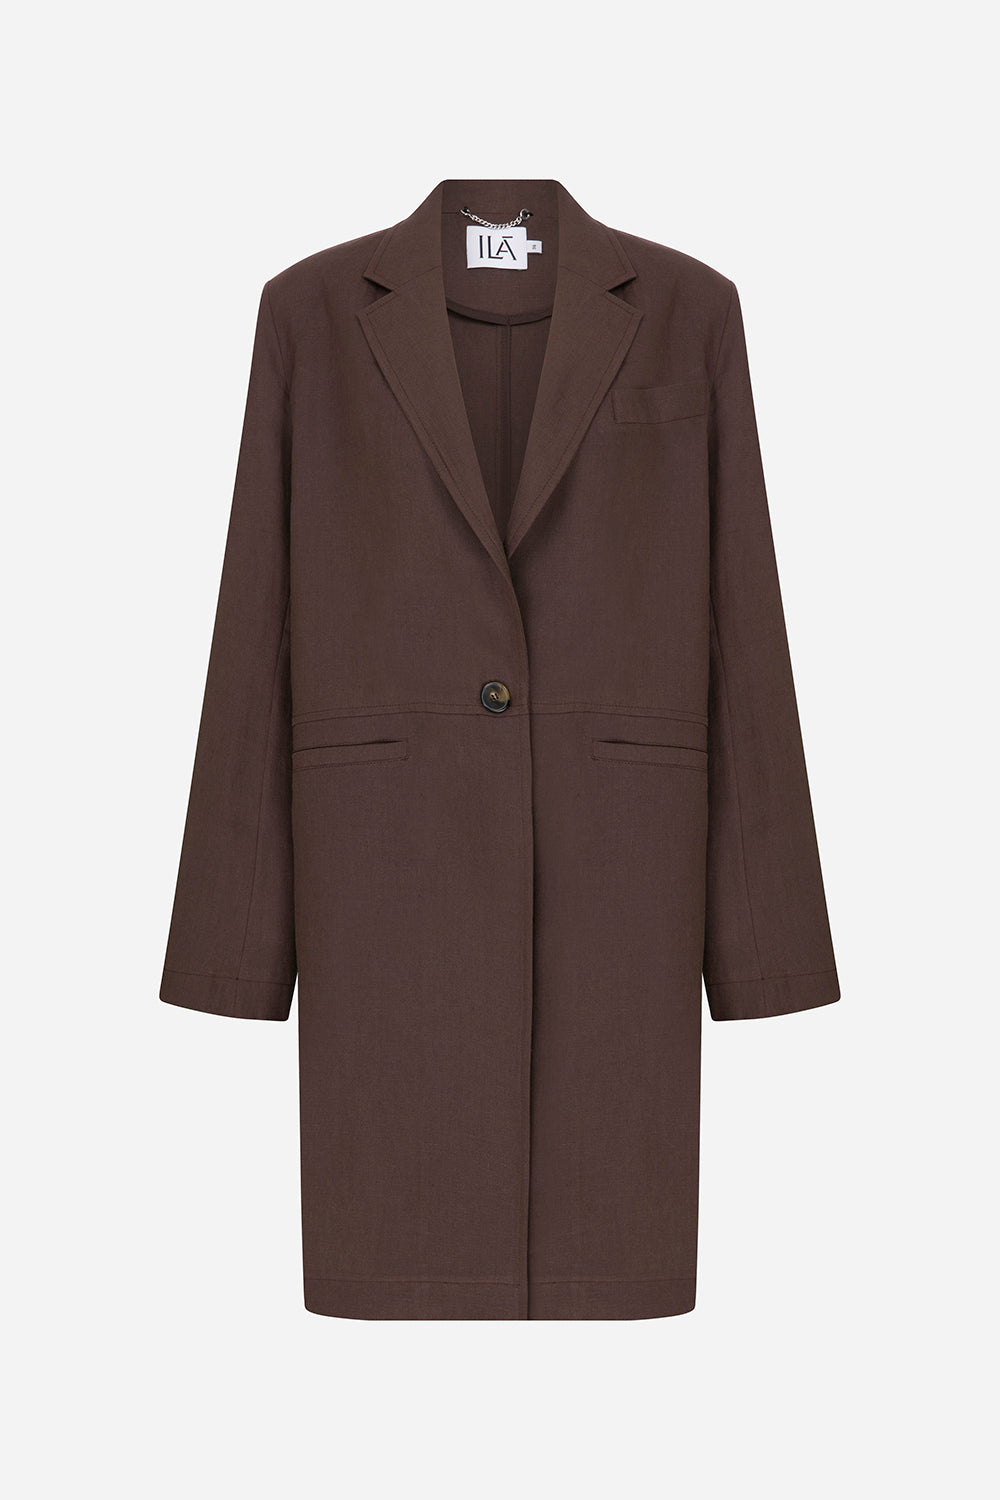 Rue - Linen Coat With Side Slits